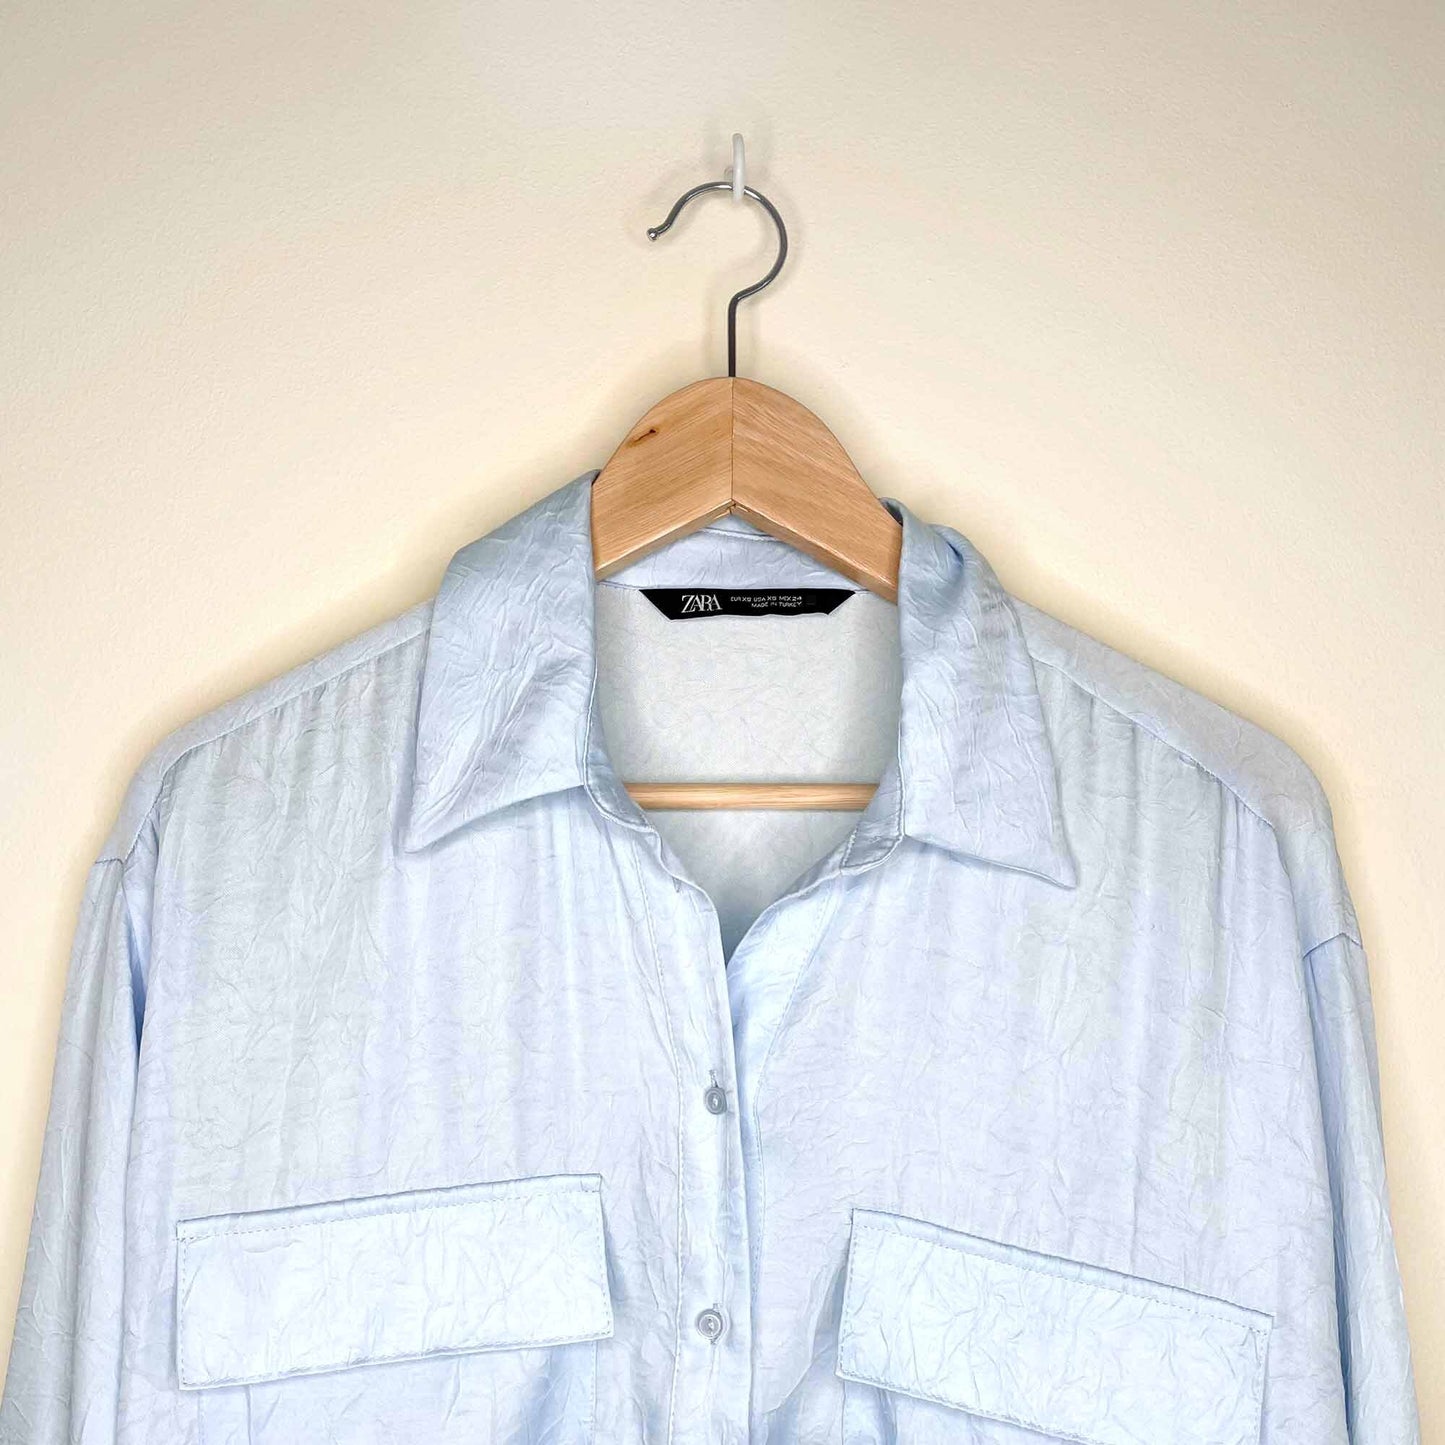 zara wrinkled button down double pocket shirt - size xs